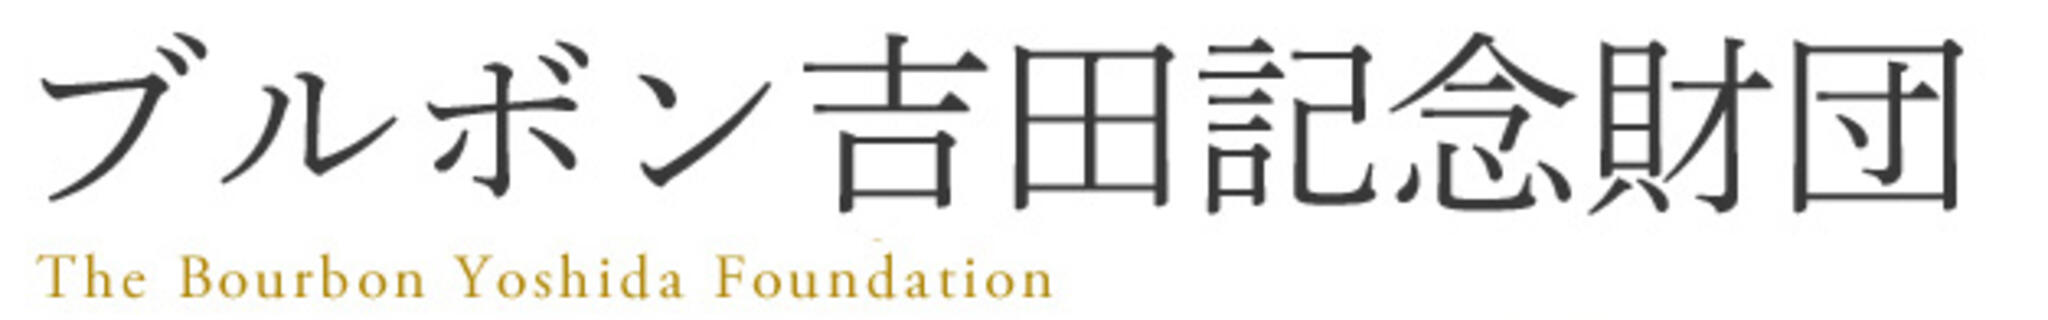 ブルボン・吉田記念財団(公益財団法人)の代表写真1